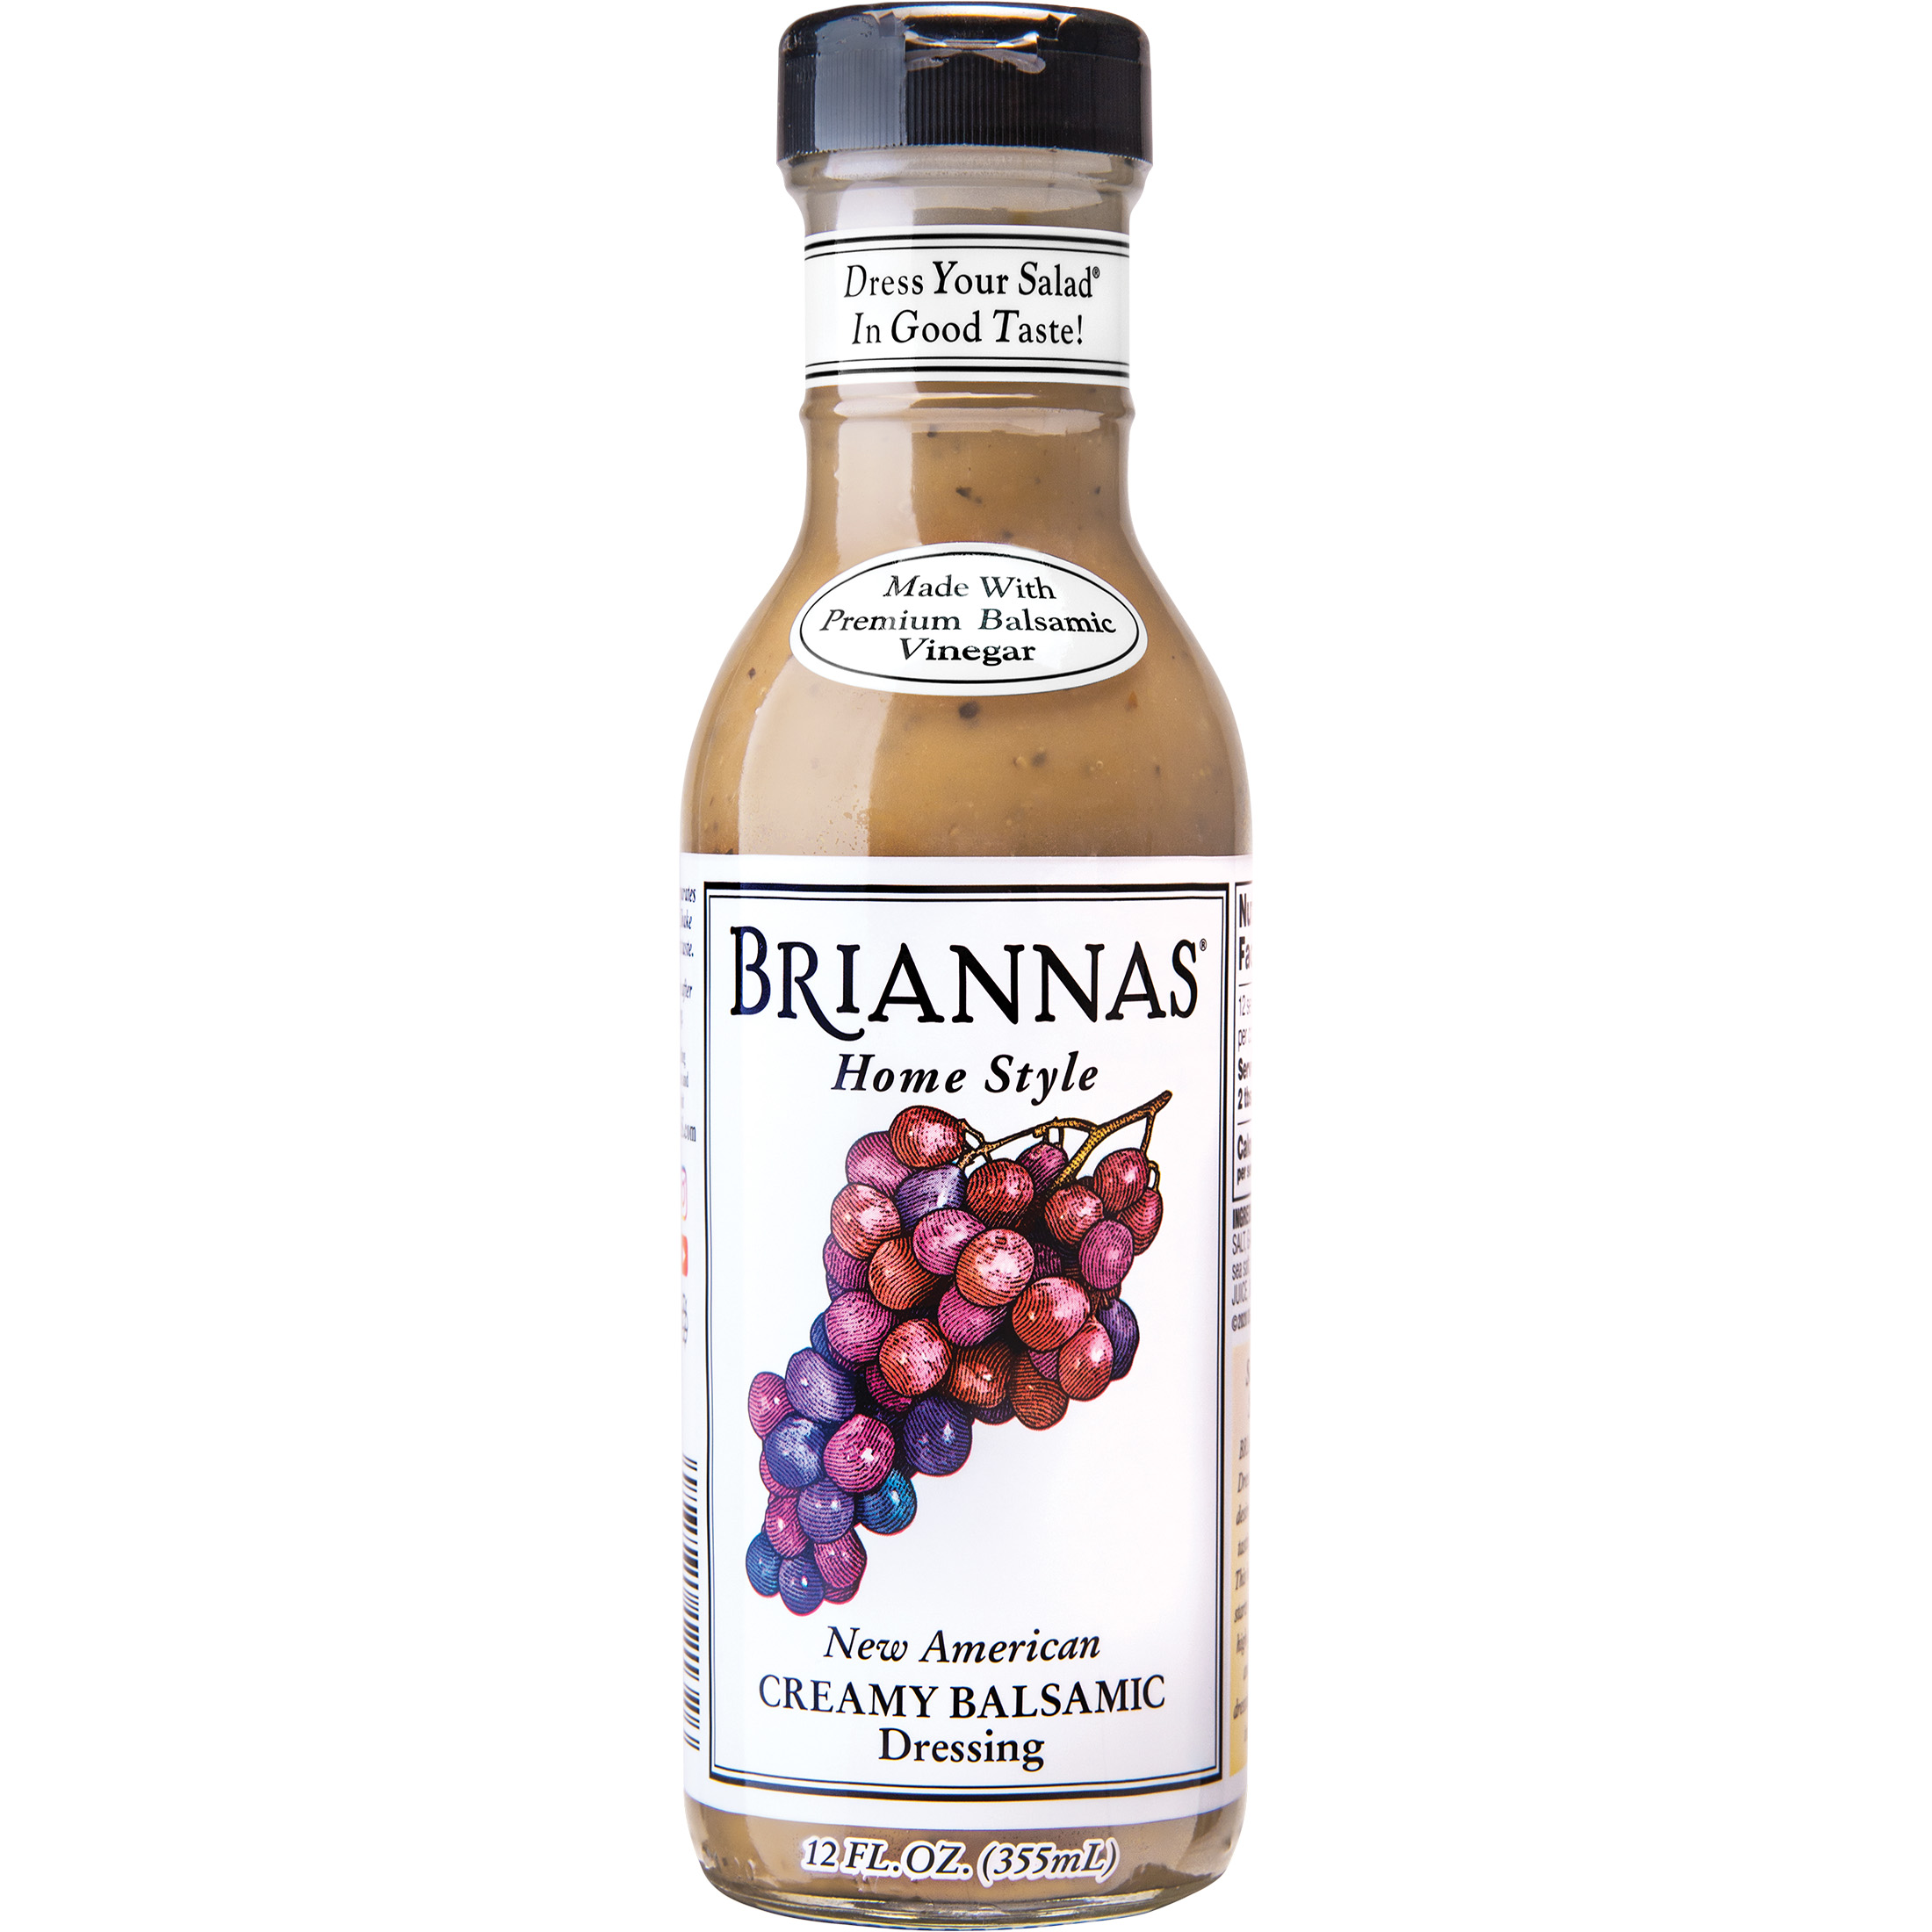 BRIANNAS Home Style New American Creamy Balsamic Salad Dressings, Gluten-Free, 12 fl oz - image 1 of 4